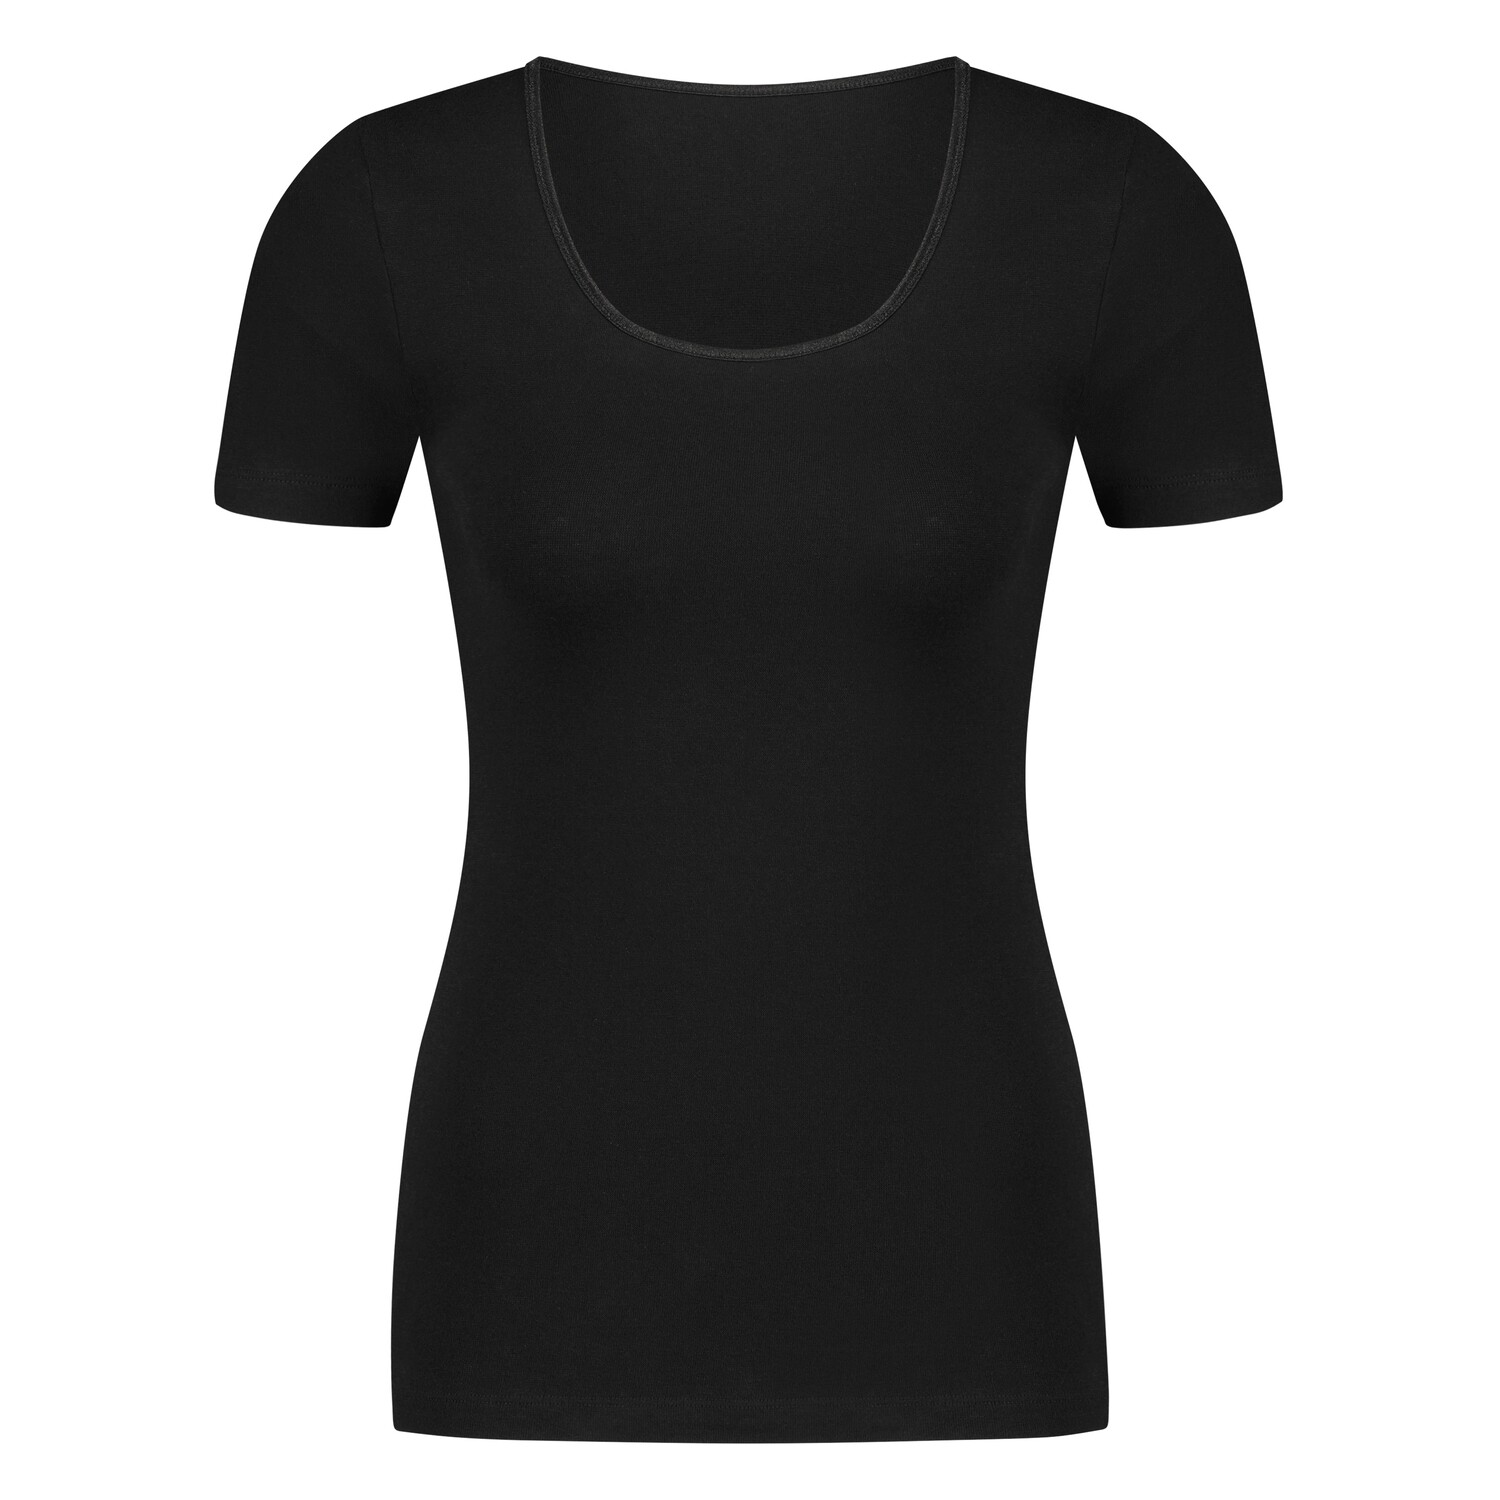 Ten Cate Basics Women T-shirt 090 Black 32288